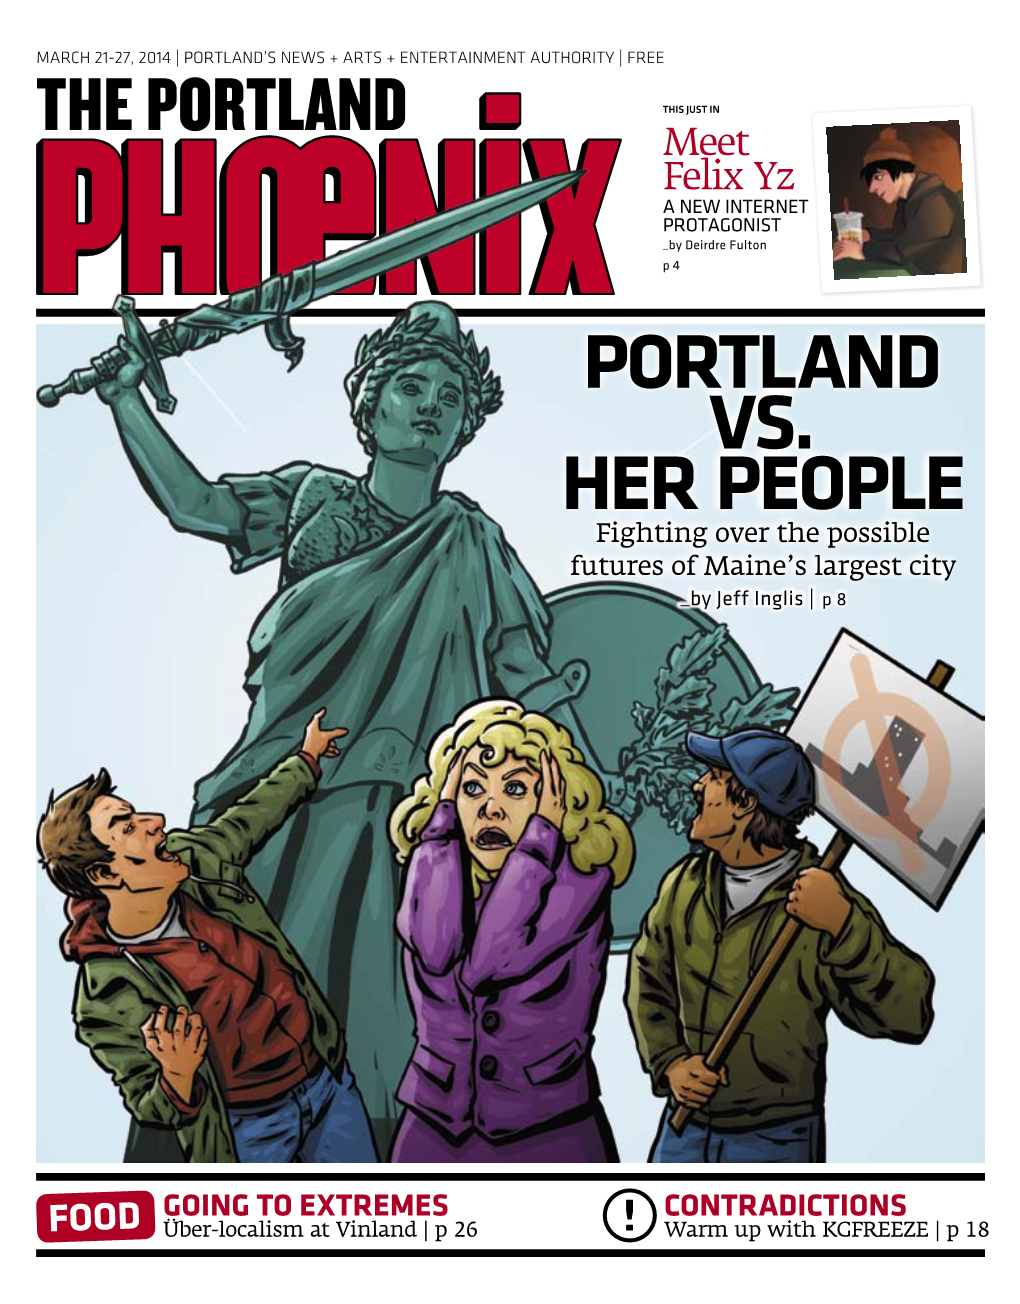 THE Portland Phoenix | MARCH 21, 2014 3 Mar